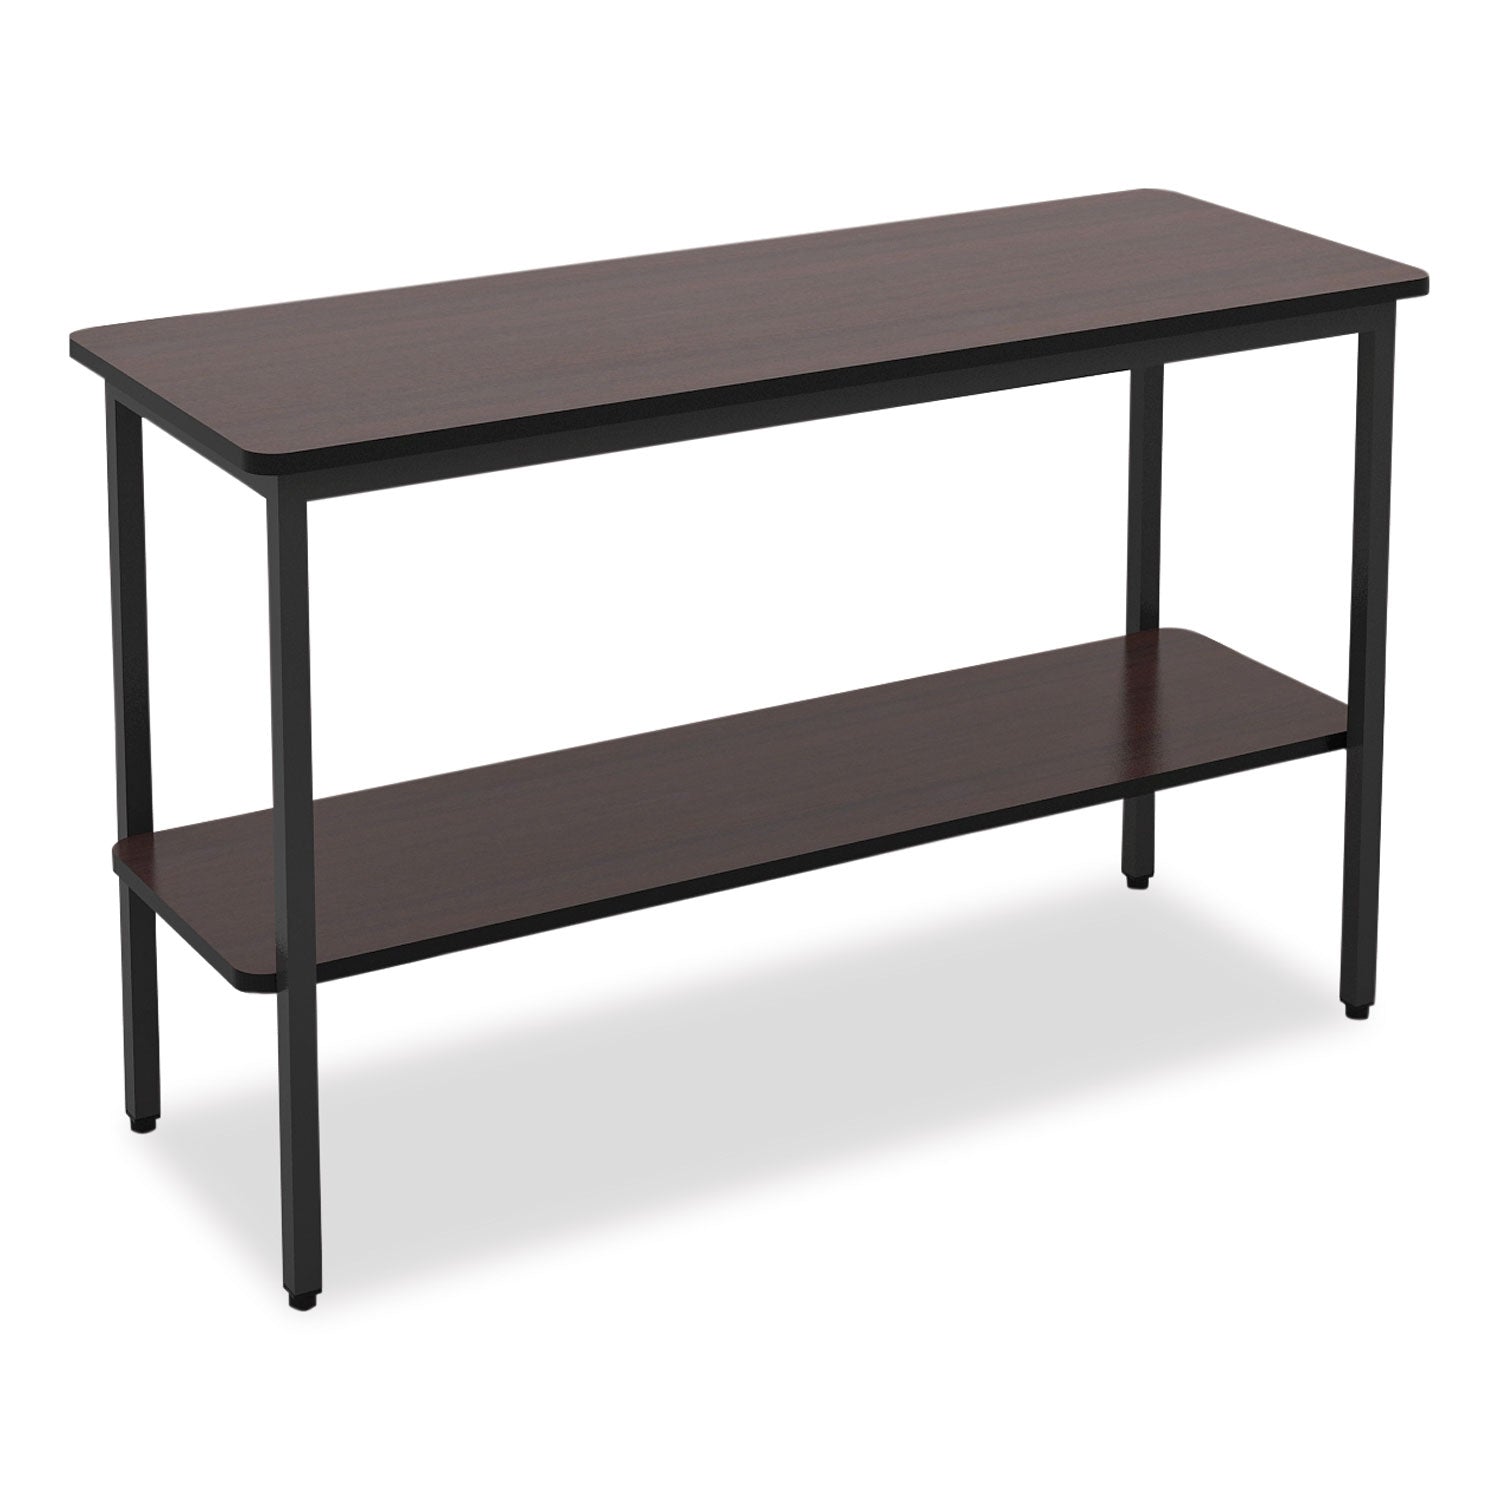 officeworks-one-shelf-utility-table-rectangular-4725-x-177-x-295-walnut-top-black-base-legs_ice69124 - 1